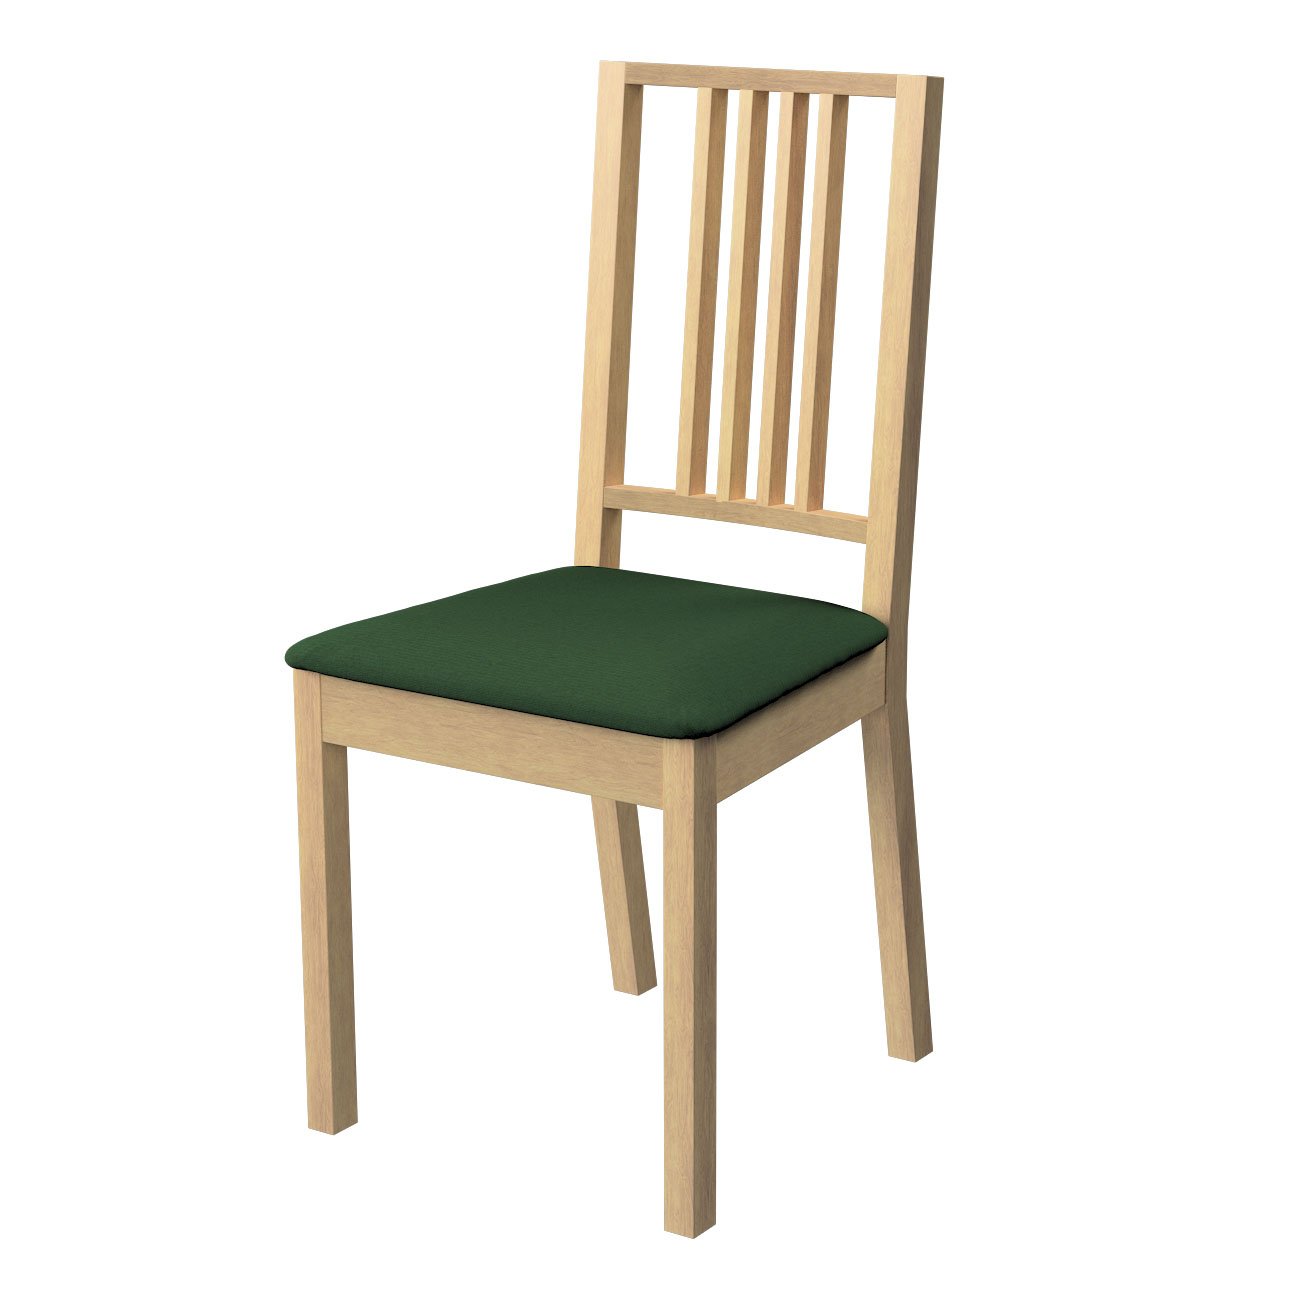 Dekoria Potah na sedák židle Börje, zelená, potah sedák židle Börje, Quadro, 144-33